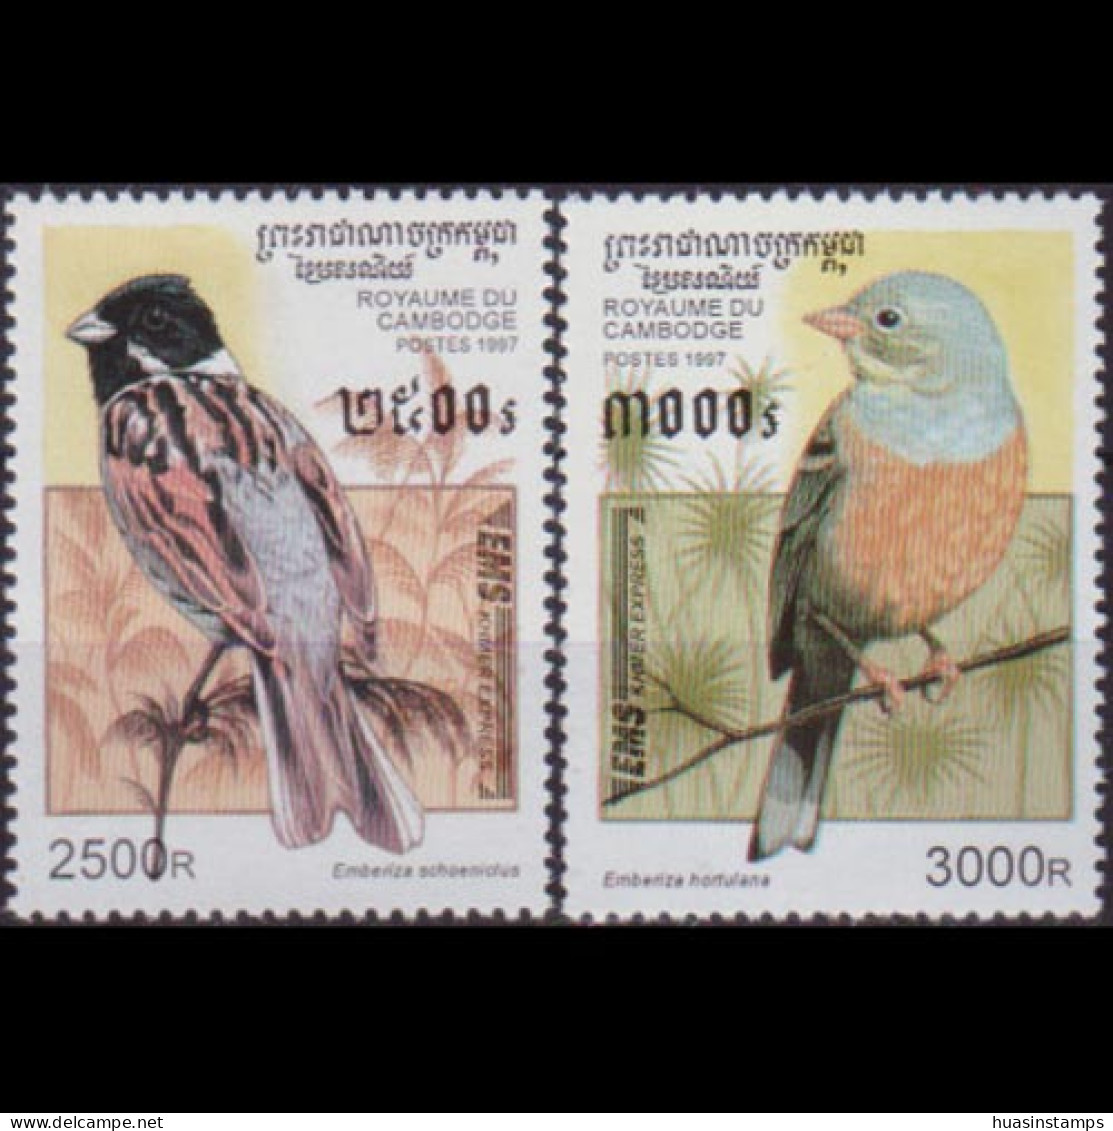 CAMBODIA 1997 - Scott# 1602-3 Birds 2500-3000r MNH - Cambodja